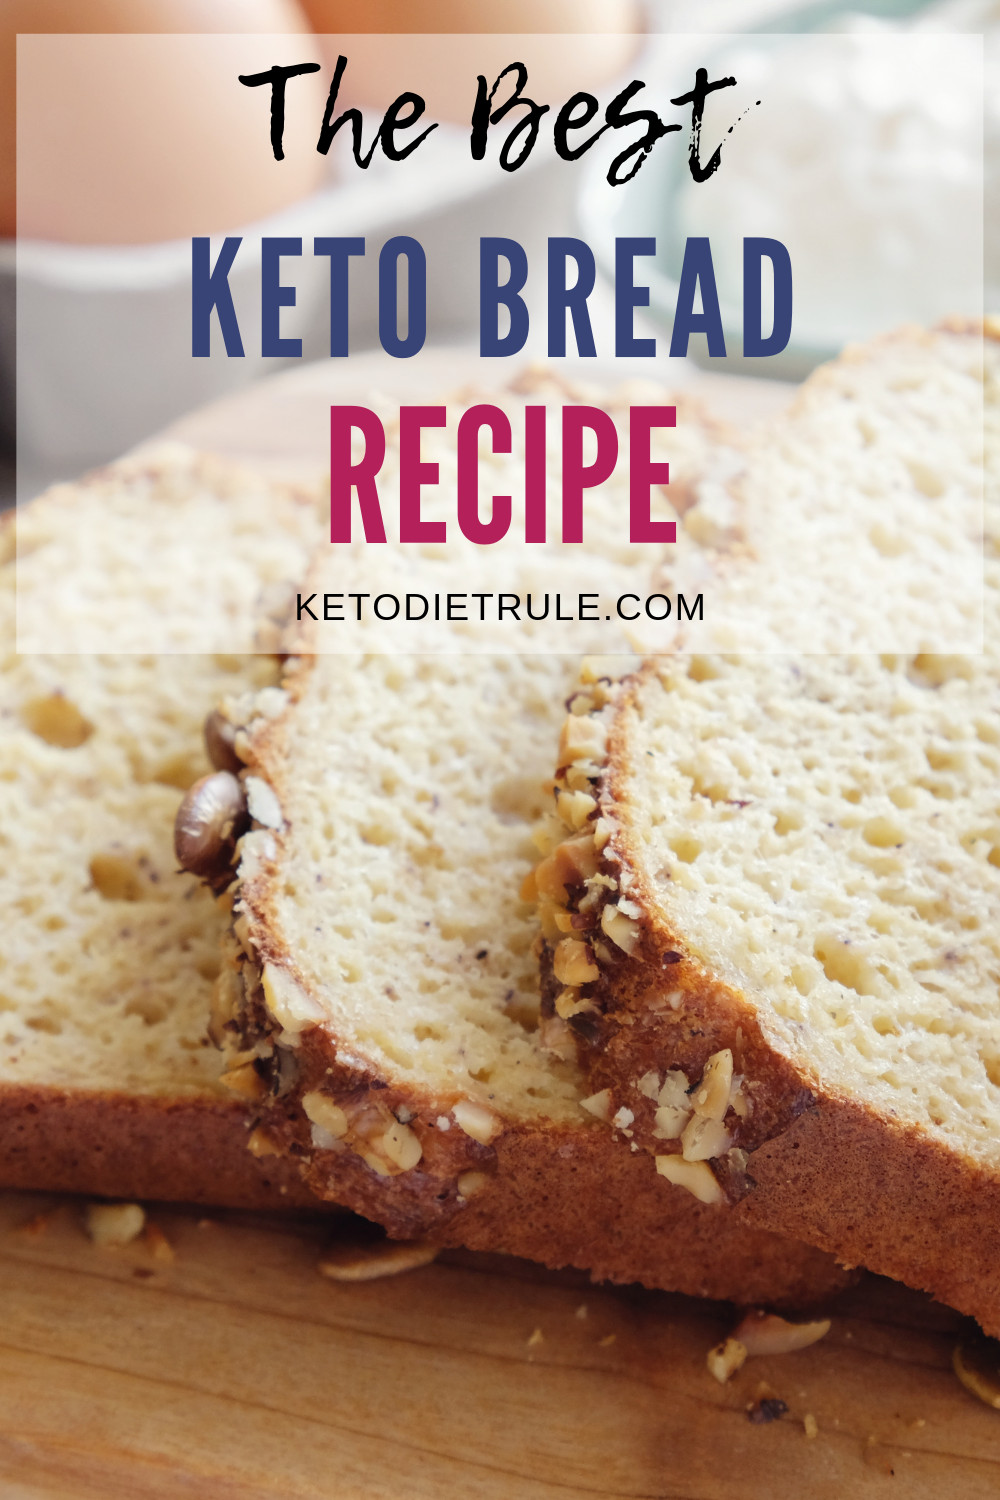 Low Carb Bread Machine Recipe Almond Flour
 Almond Flour Low Carb Bread for the Keto Diet